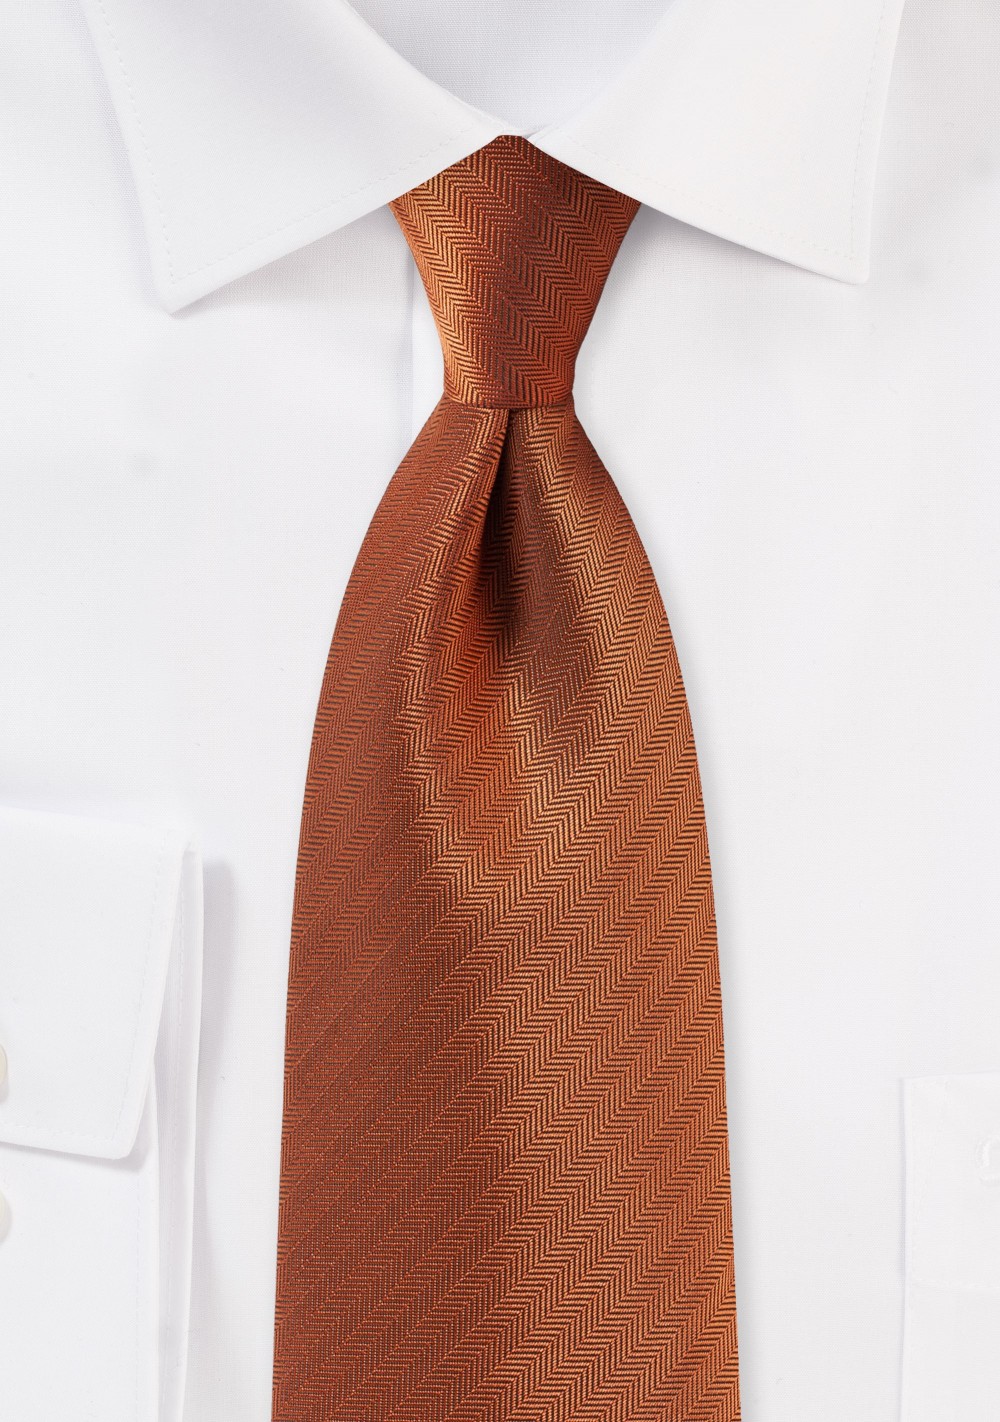 Herringbone Tie in Burnt Orange